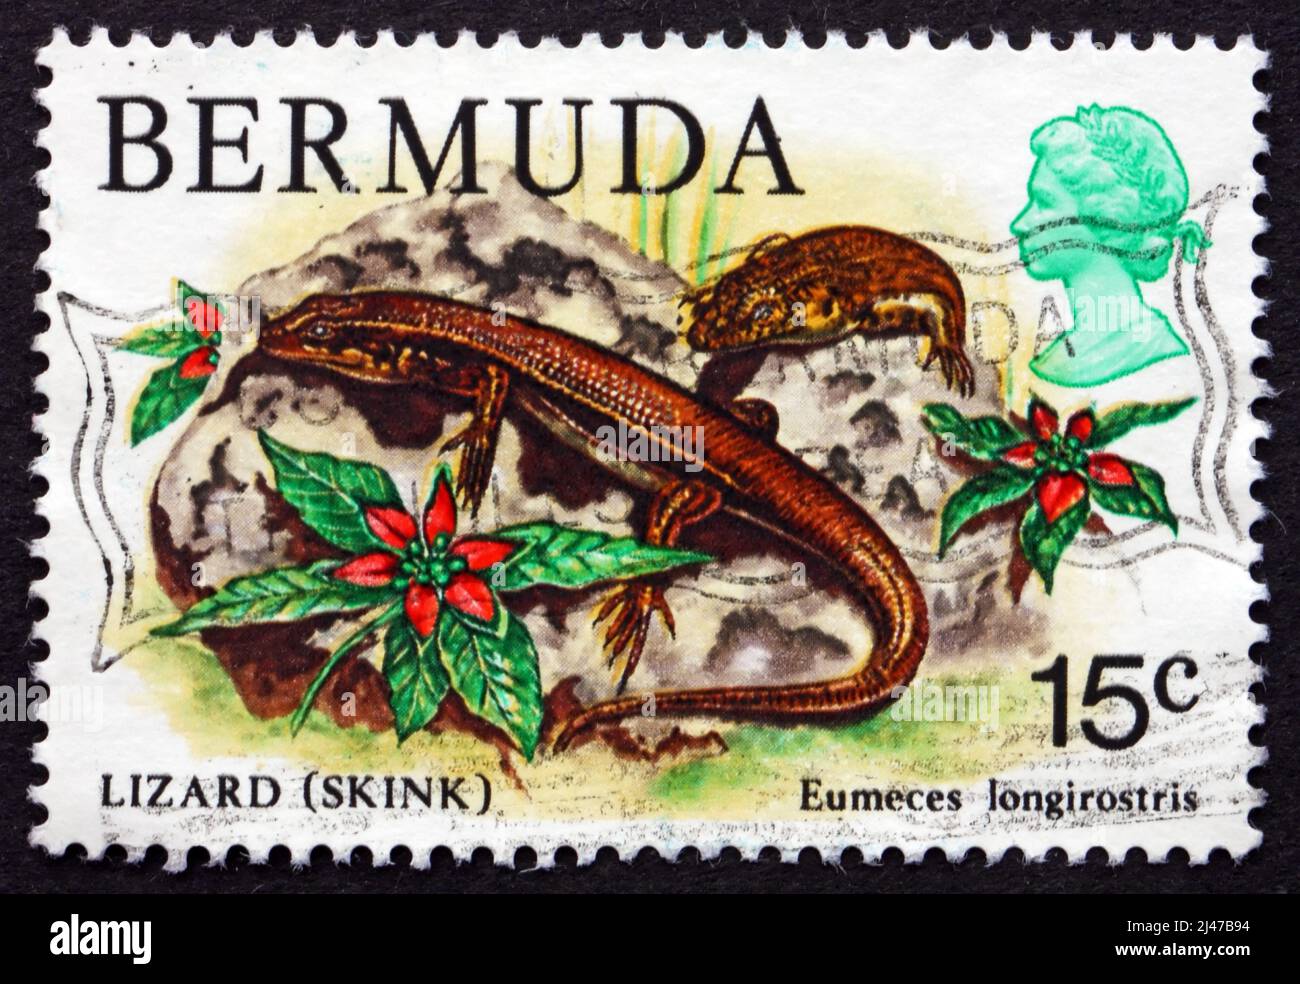 BERMUDA - CIRCA 1979: a stamp printed in Bermuda shows Bermuda Skink, Rock Lizard, Eumeces Longirostris, Reptile, circa 1979 Stock Photo